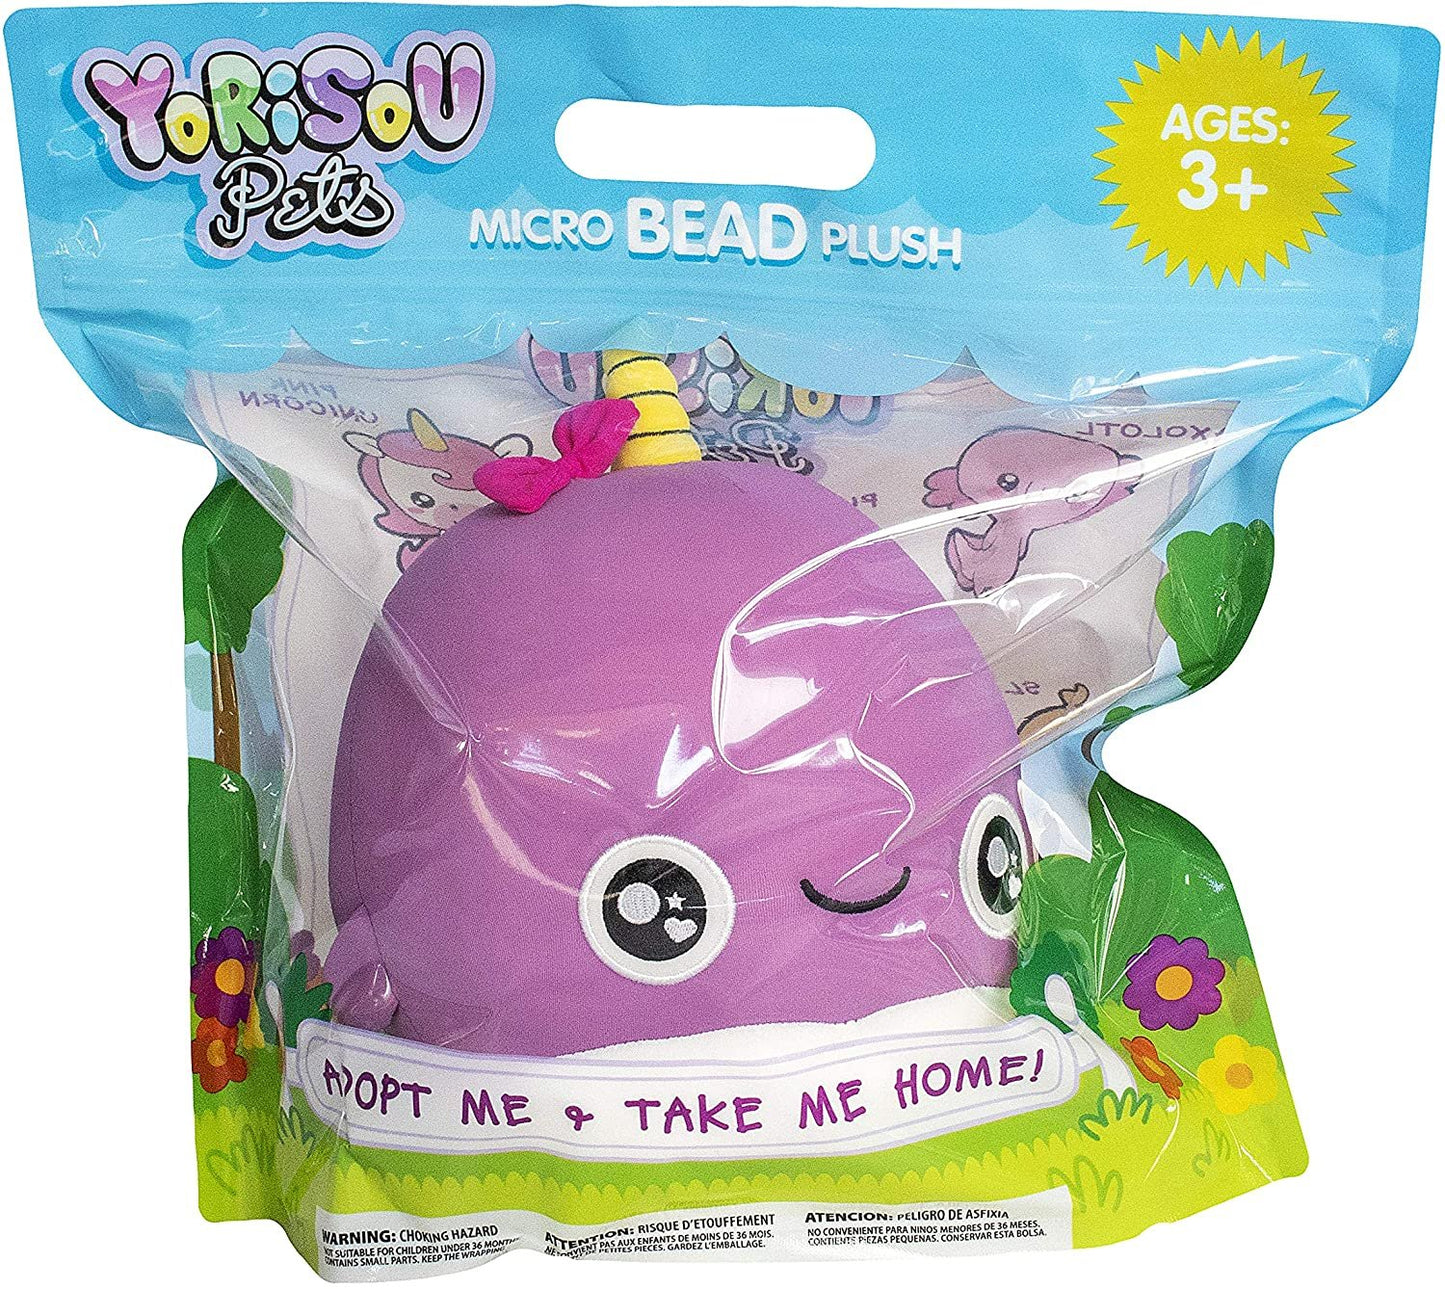 Yorisou Pets Micro Bead Plush